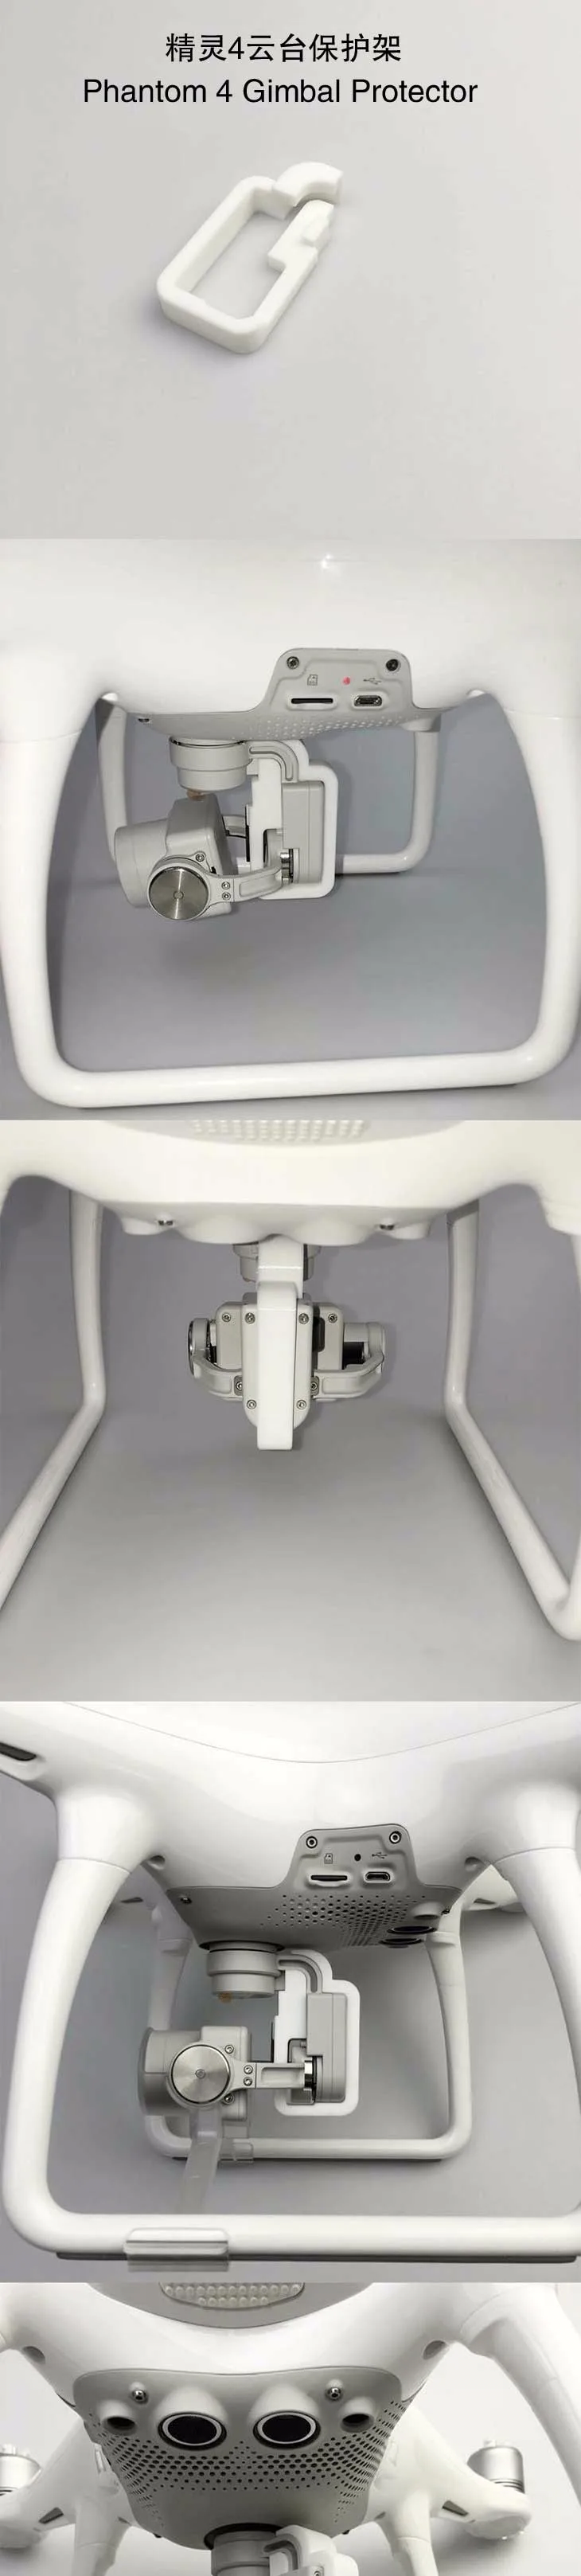 Gimbal Guard анти-Краш протектор для DJI Phantom 4 Drone аксессуар 3D печатная версия